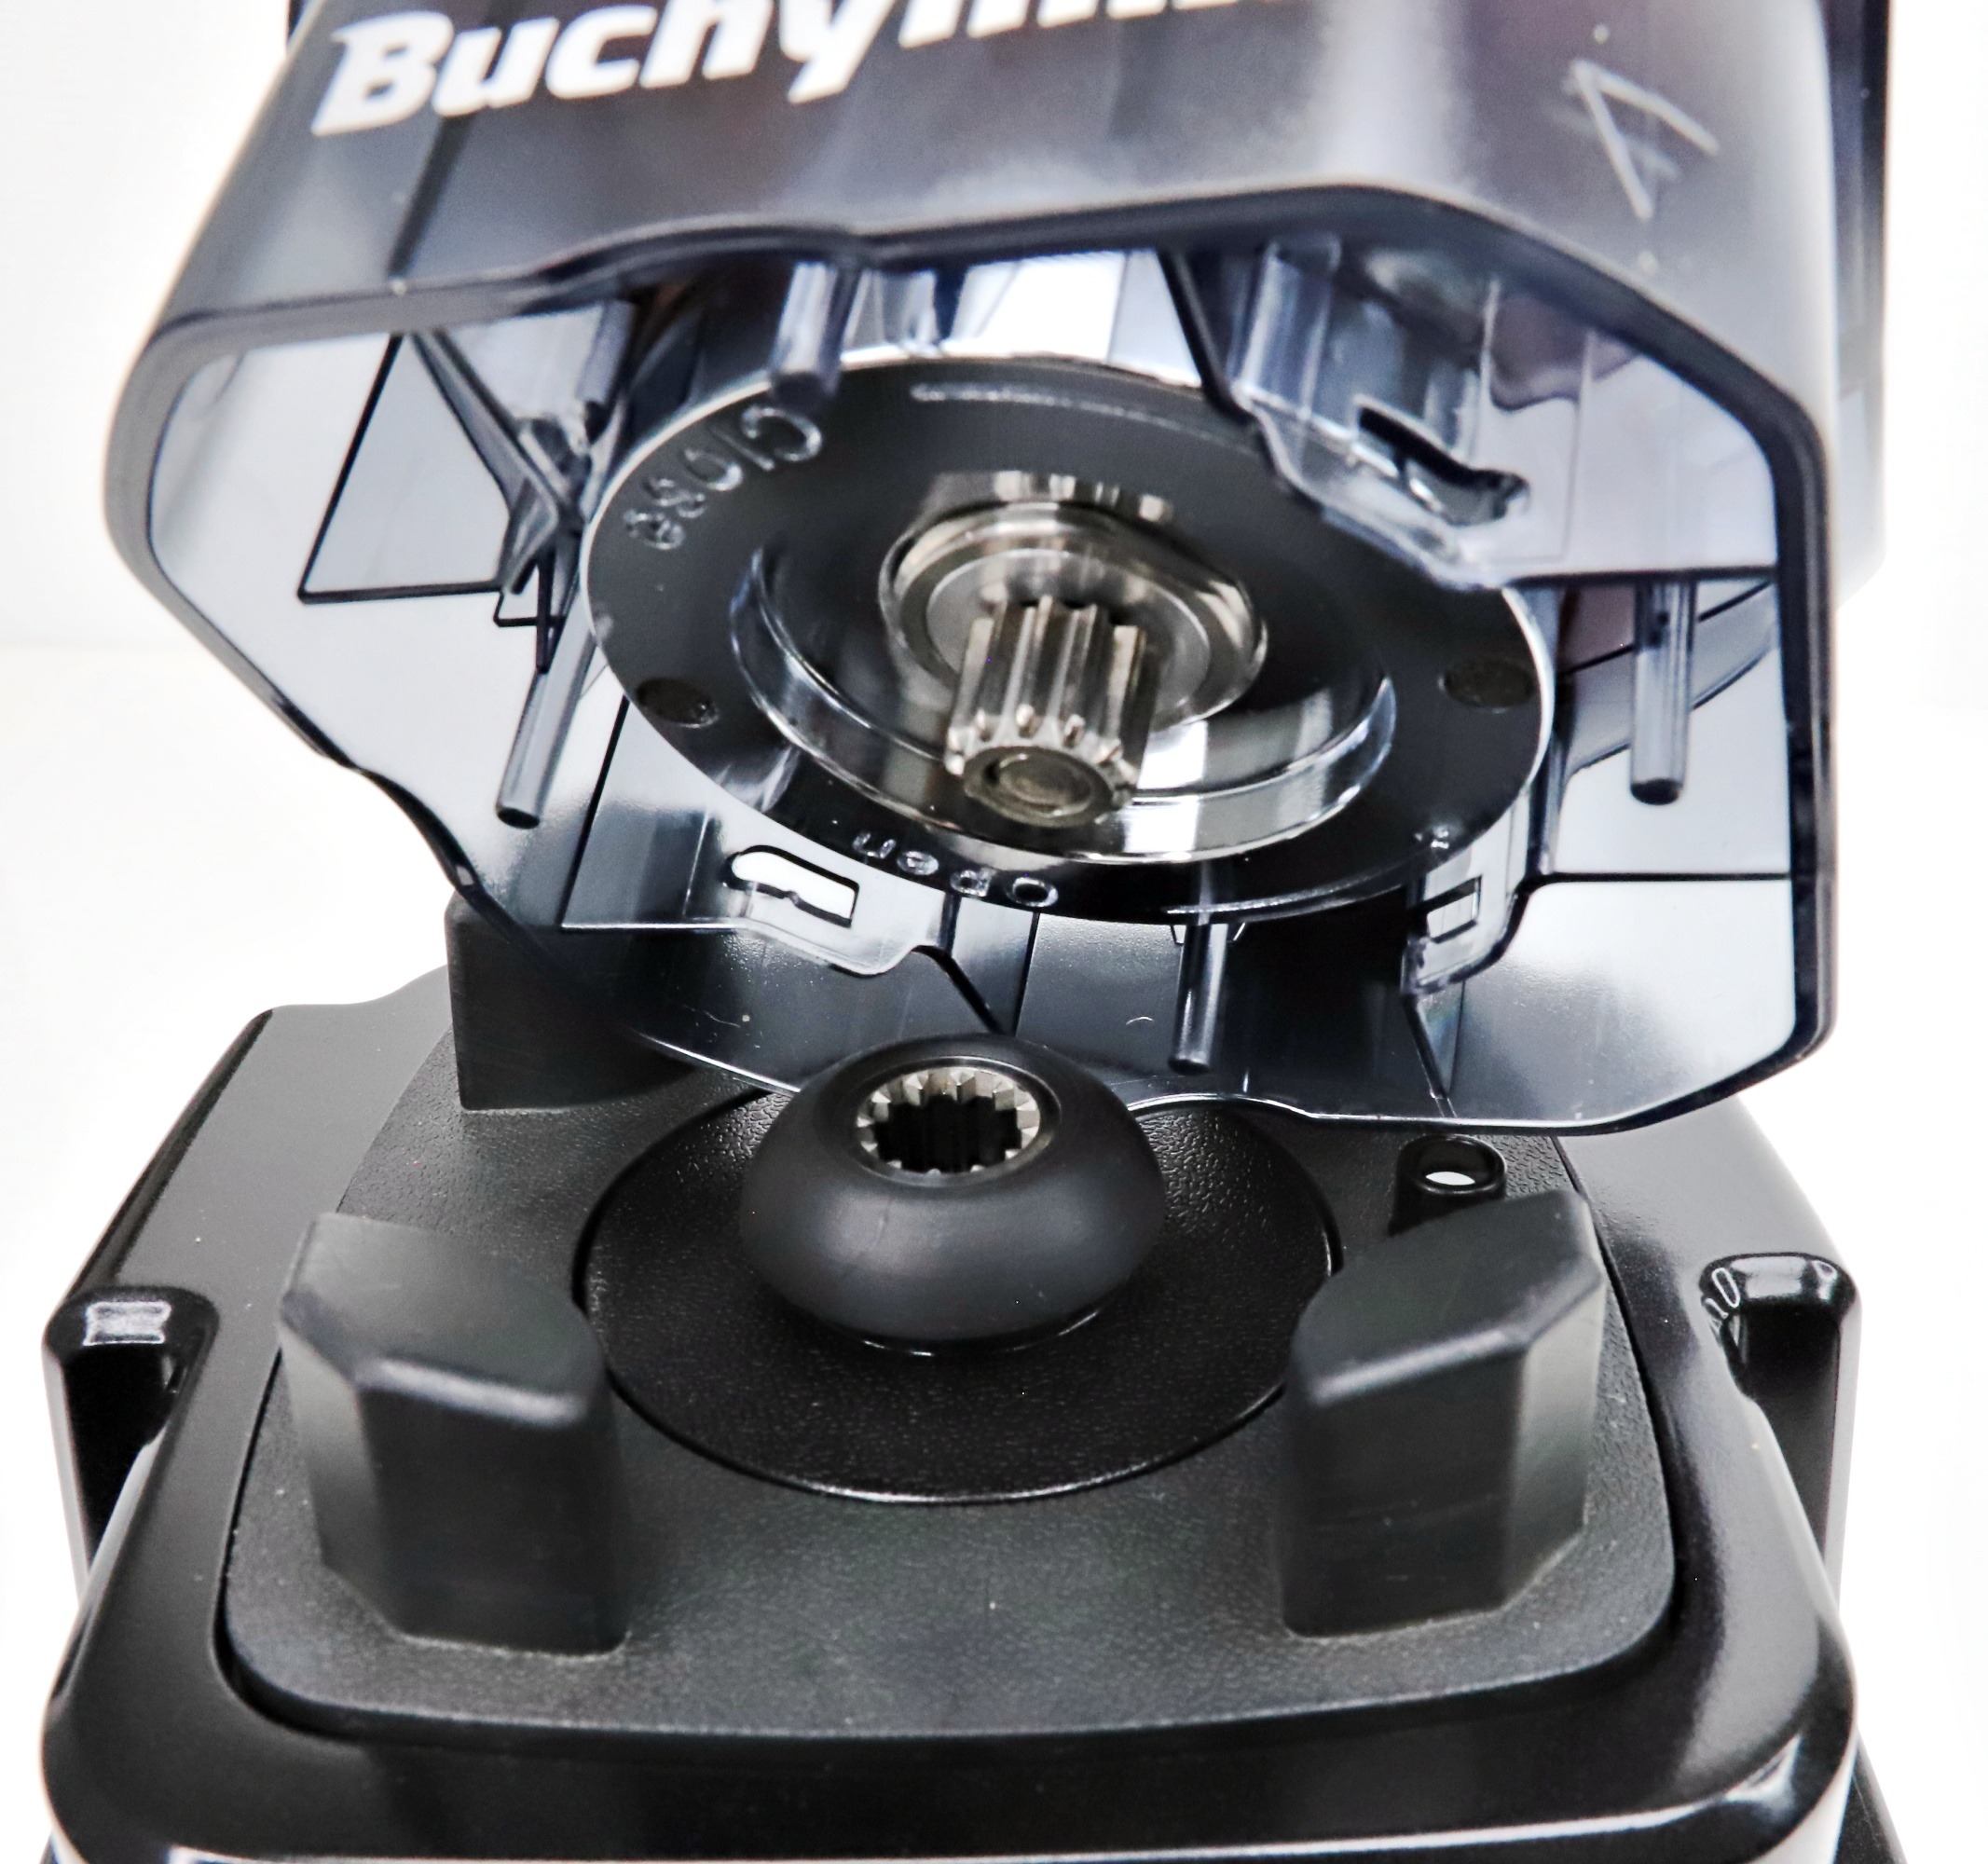 Buchymix New Digital Turbo Blender (BM300) INSTANT DELIVERY! in